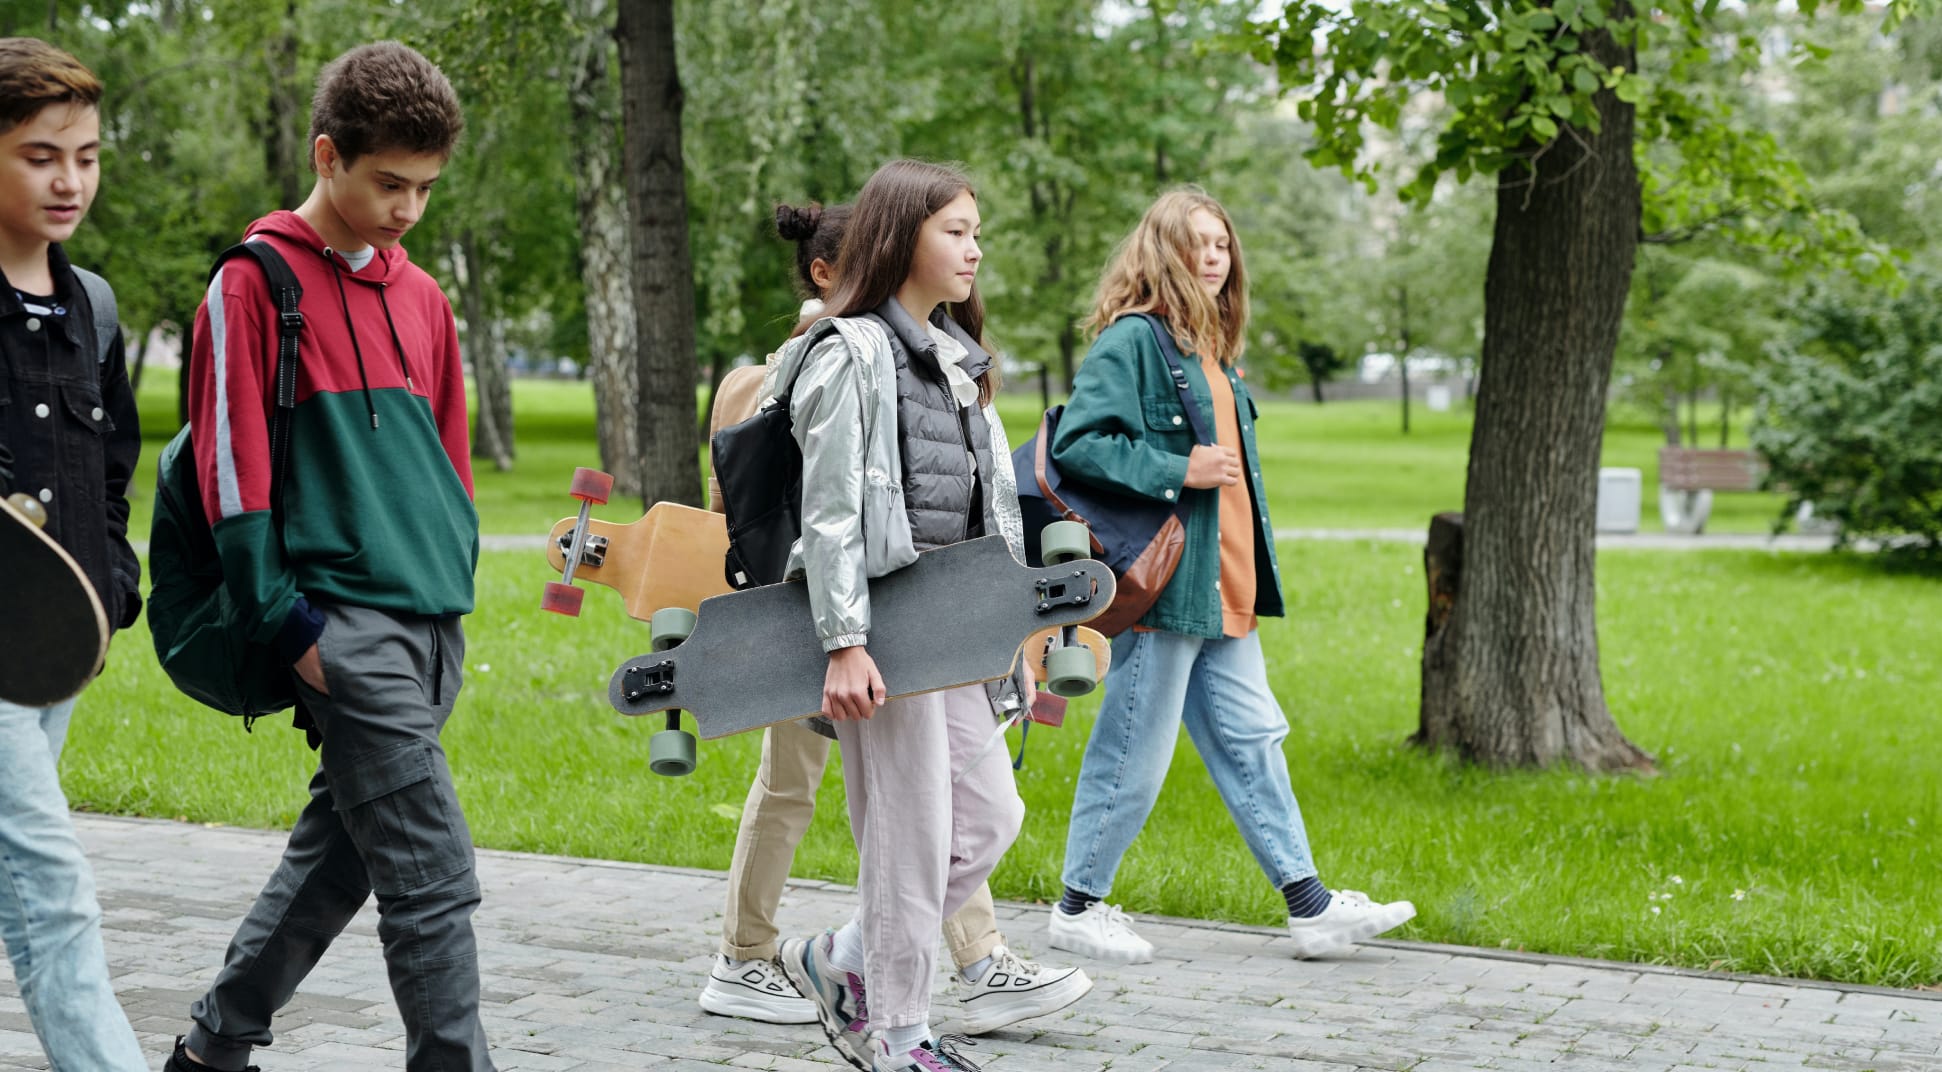 Teenagers Walking Outside Holding Backpacks and Skateboards